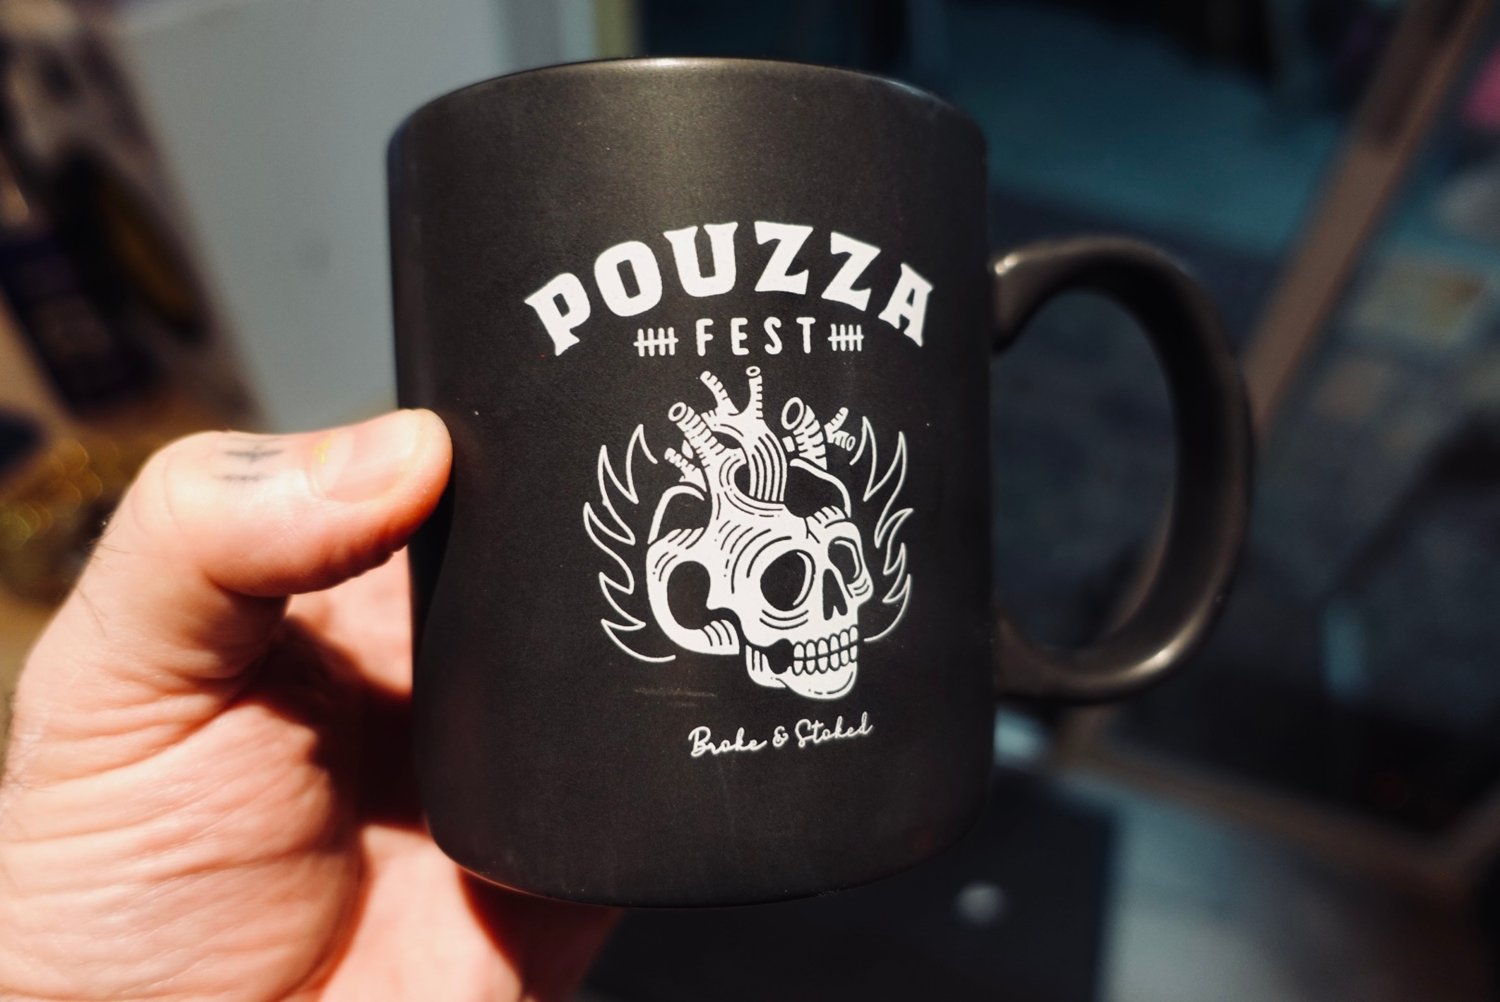 Image of Tasse Pouzza / Pouzza mug.